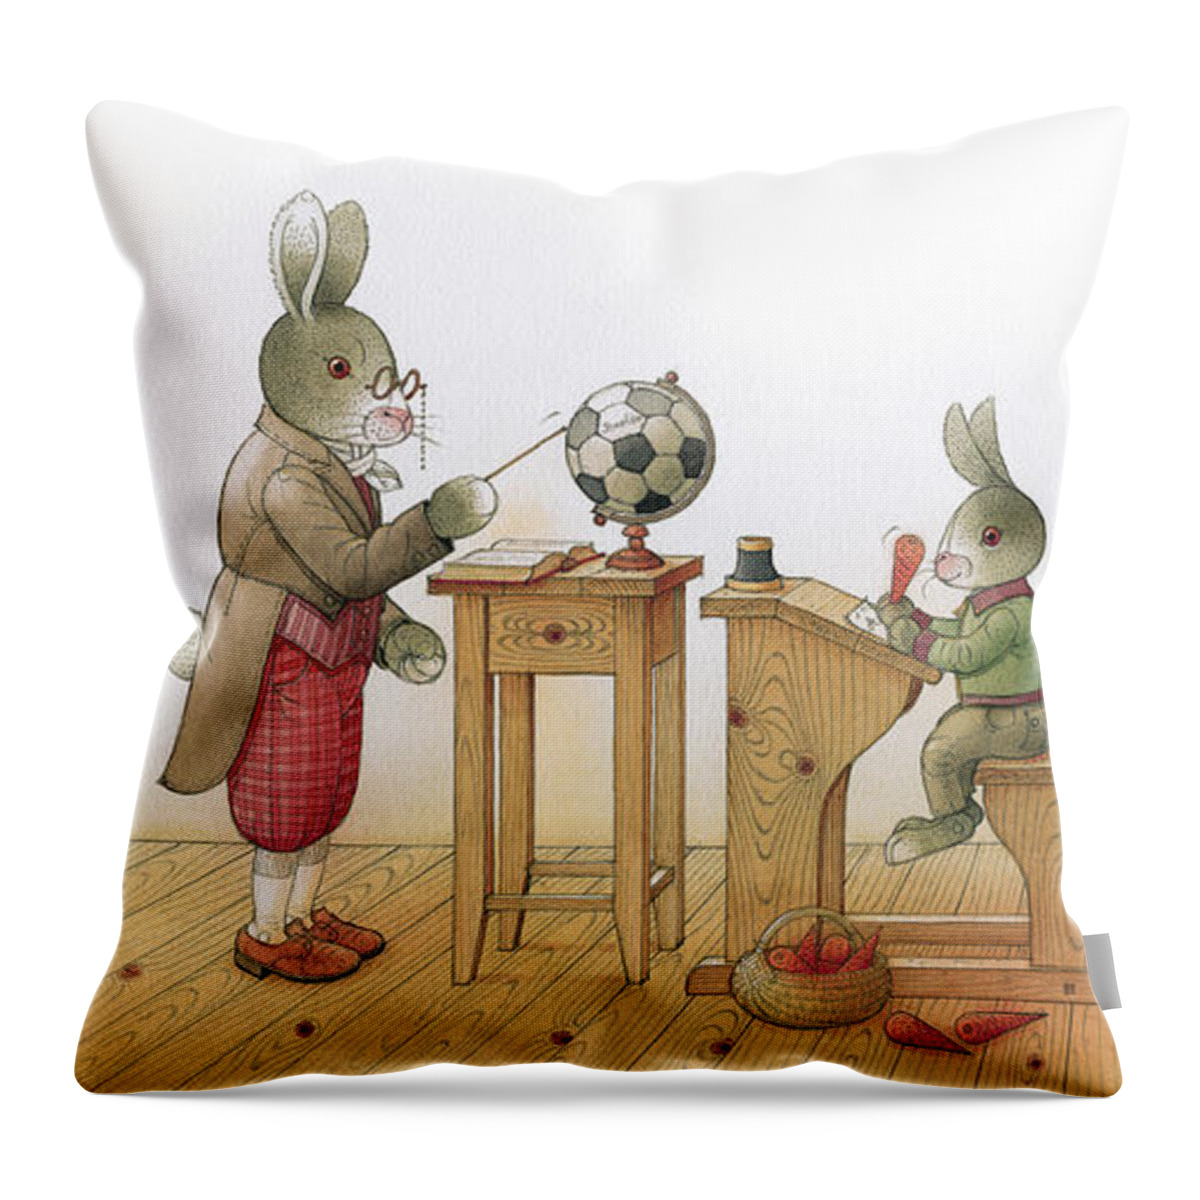 Rabbit School Class Education Reading Teacher Throw Pillow featuring the drawing Rabbit school 02 by Kestutis Kasparavicius